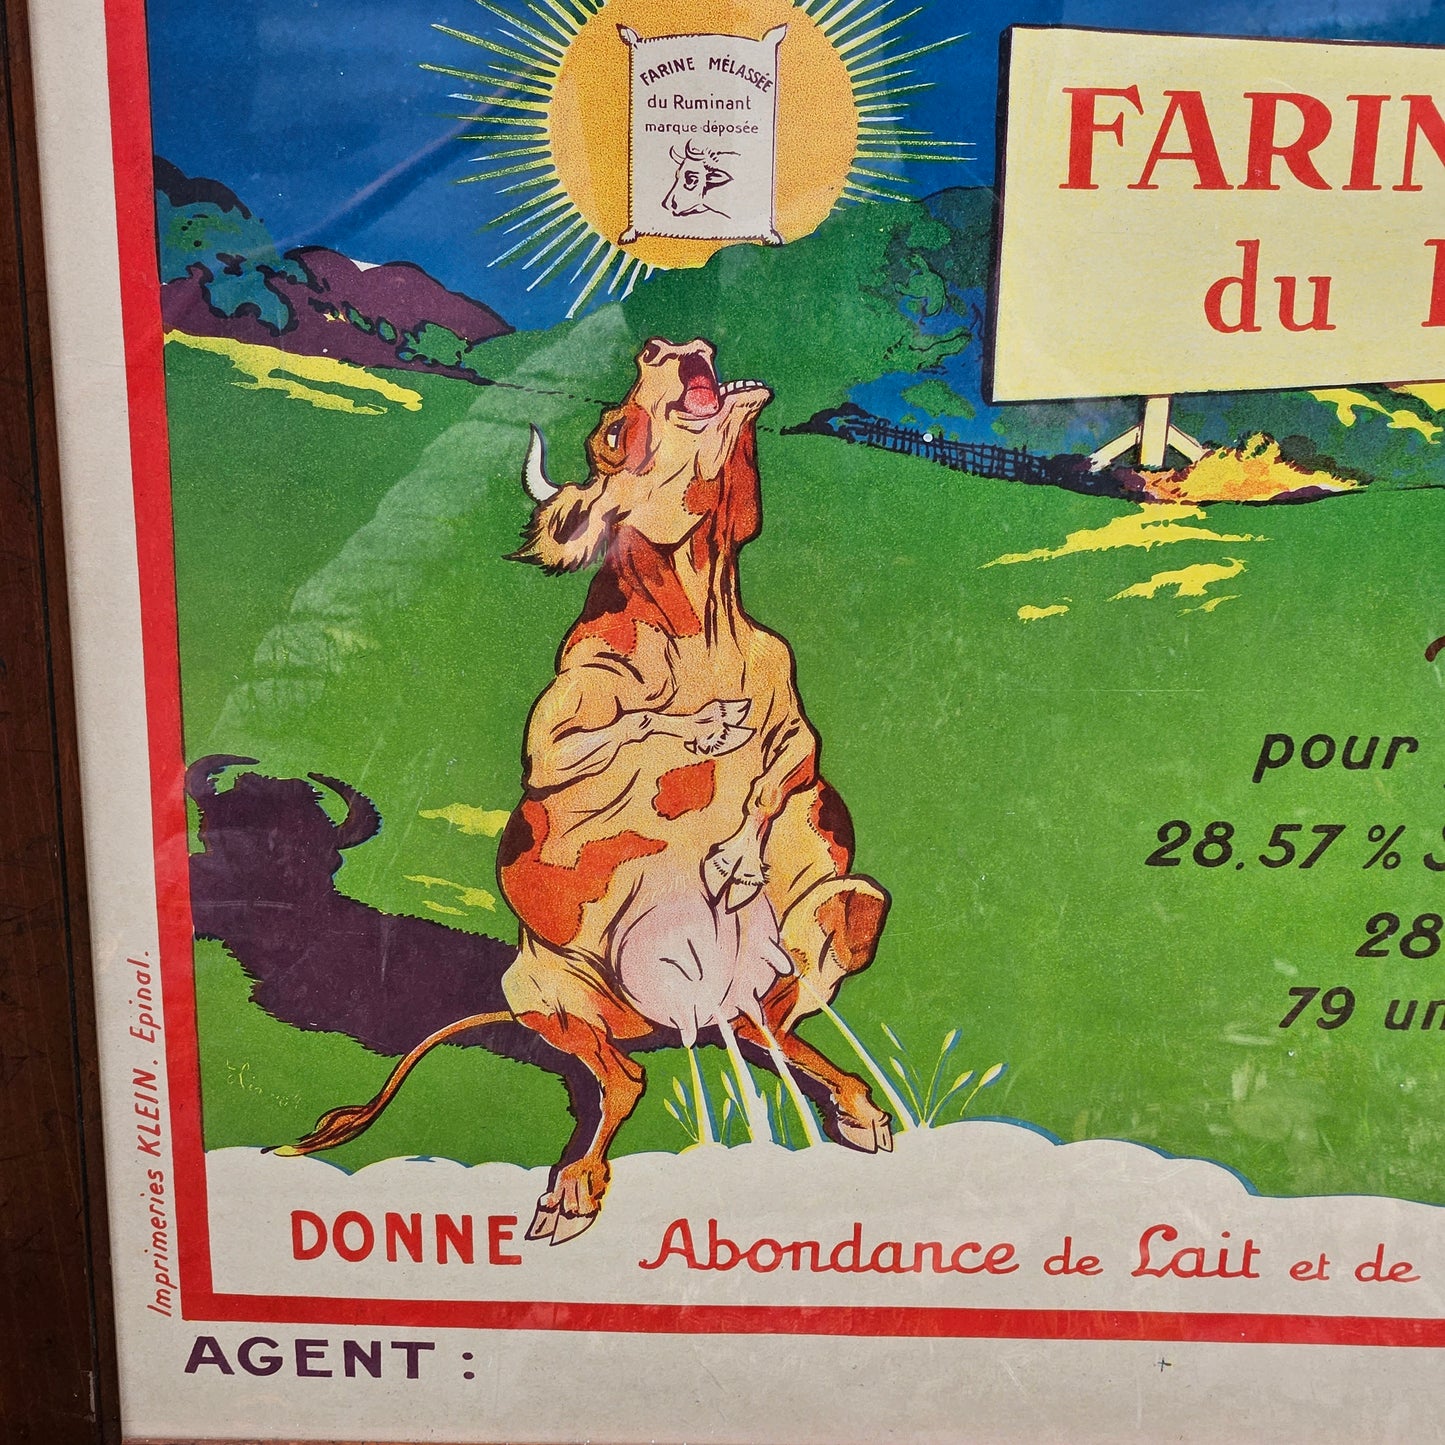 Large Vintage French Vigor Poster